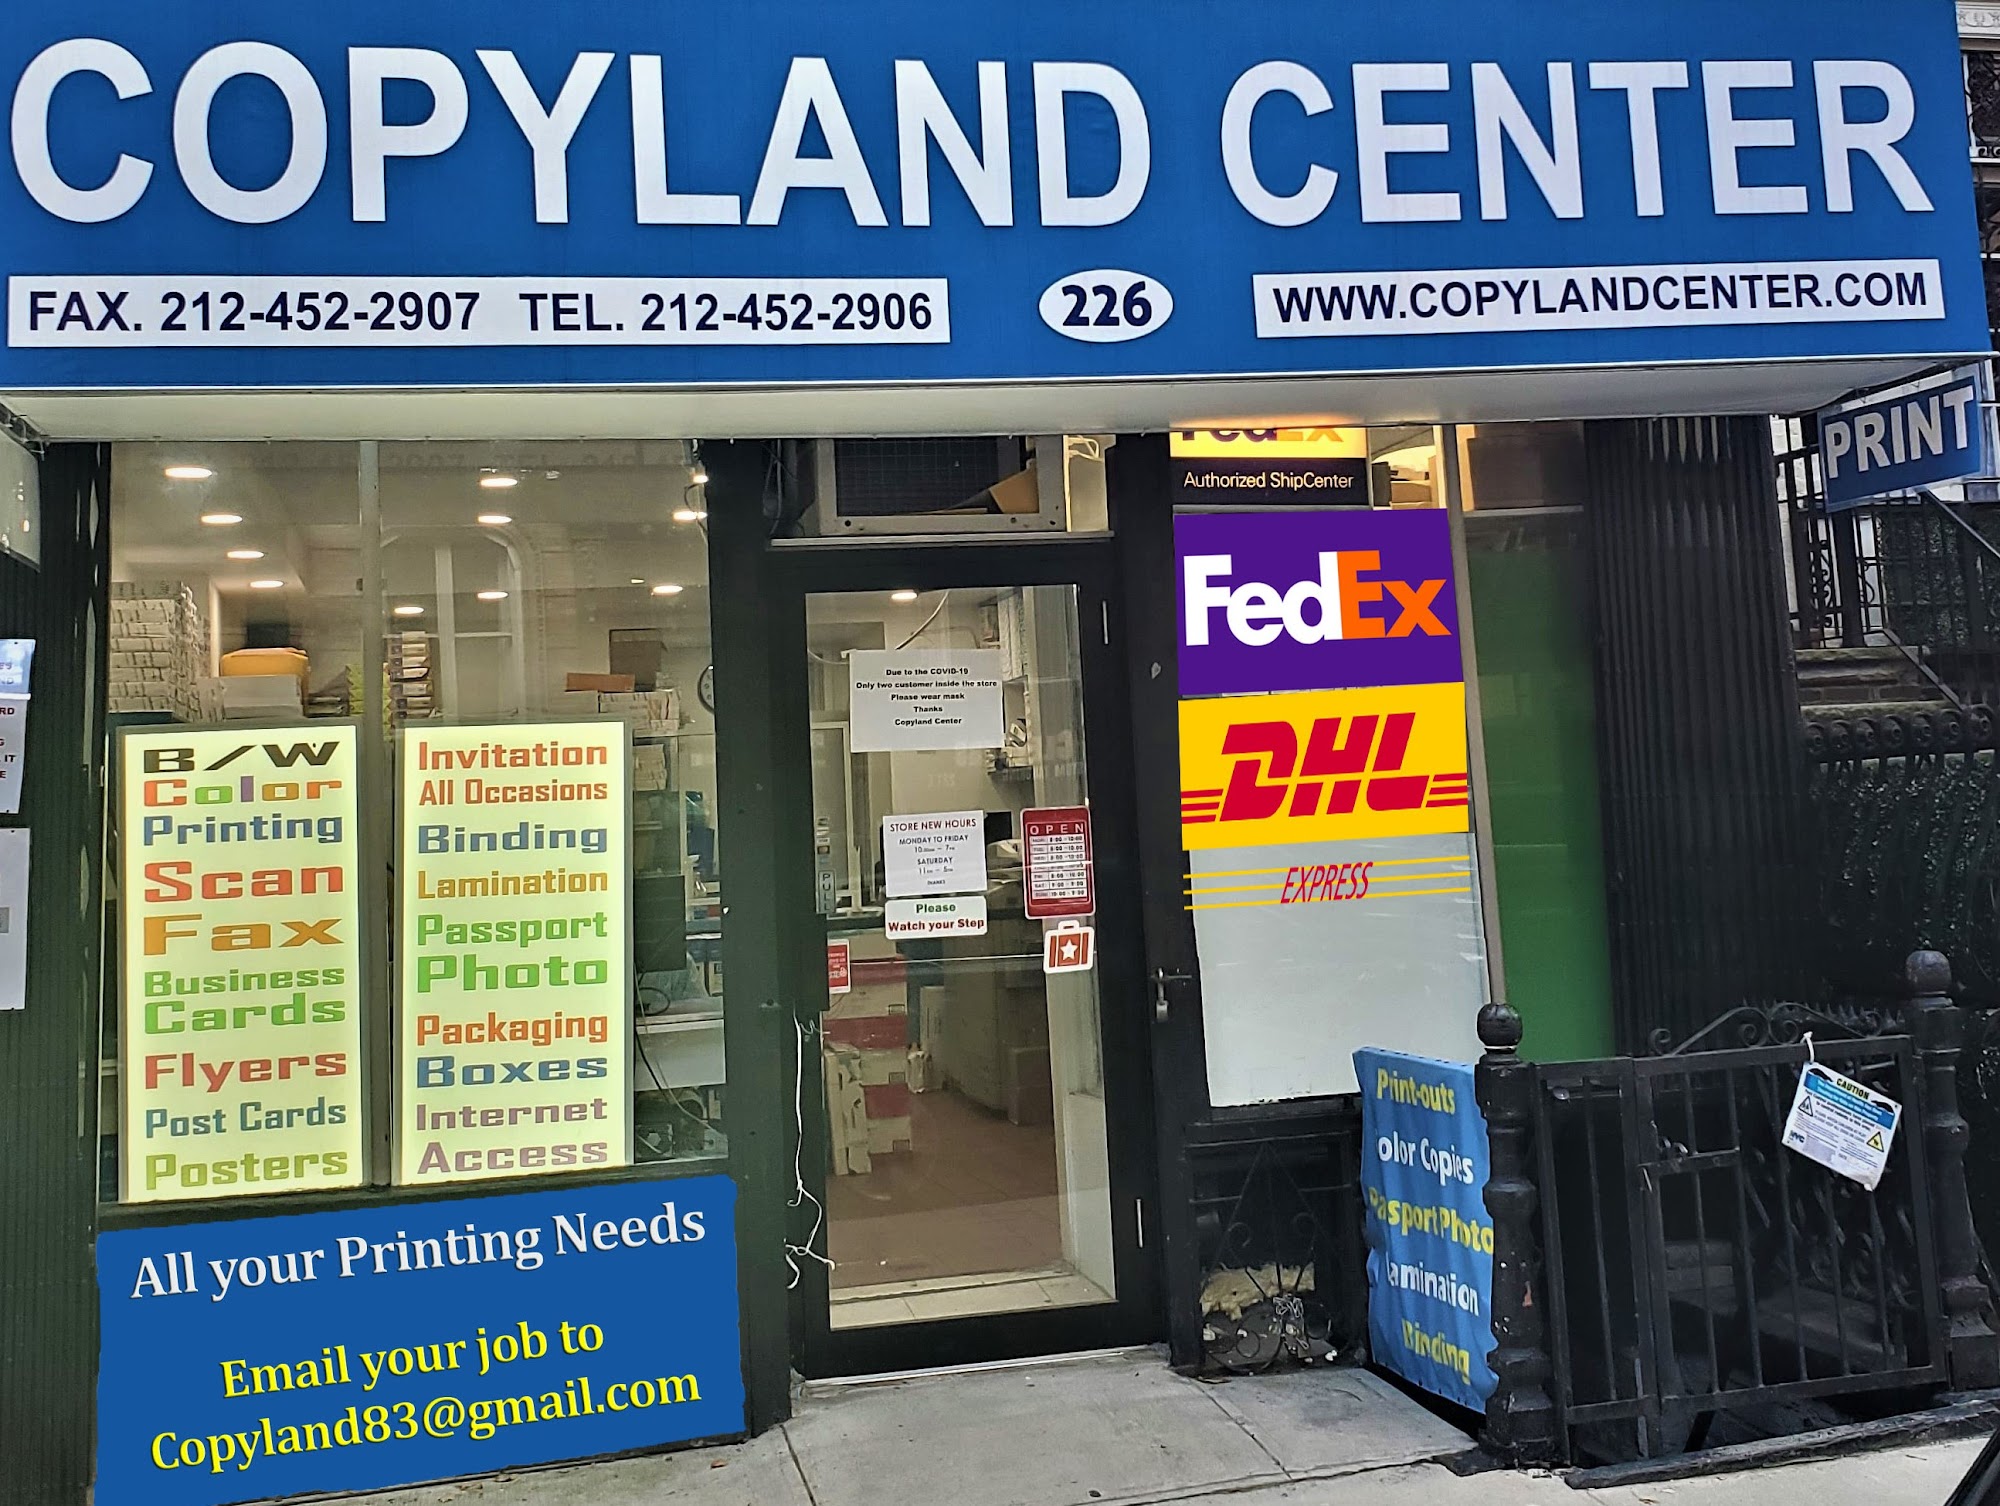 Copyland Center Inc